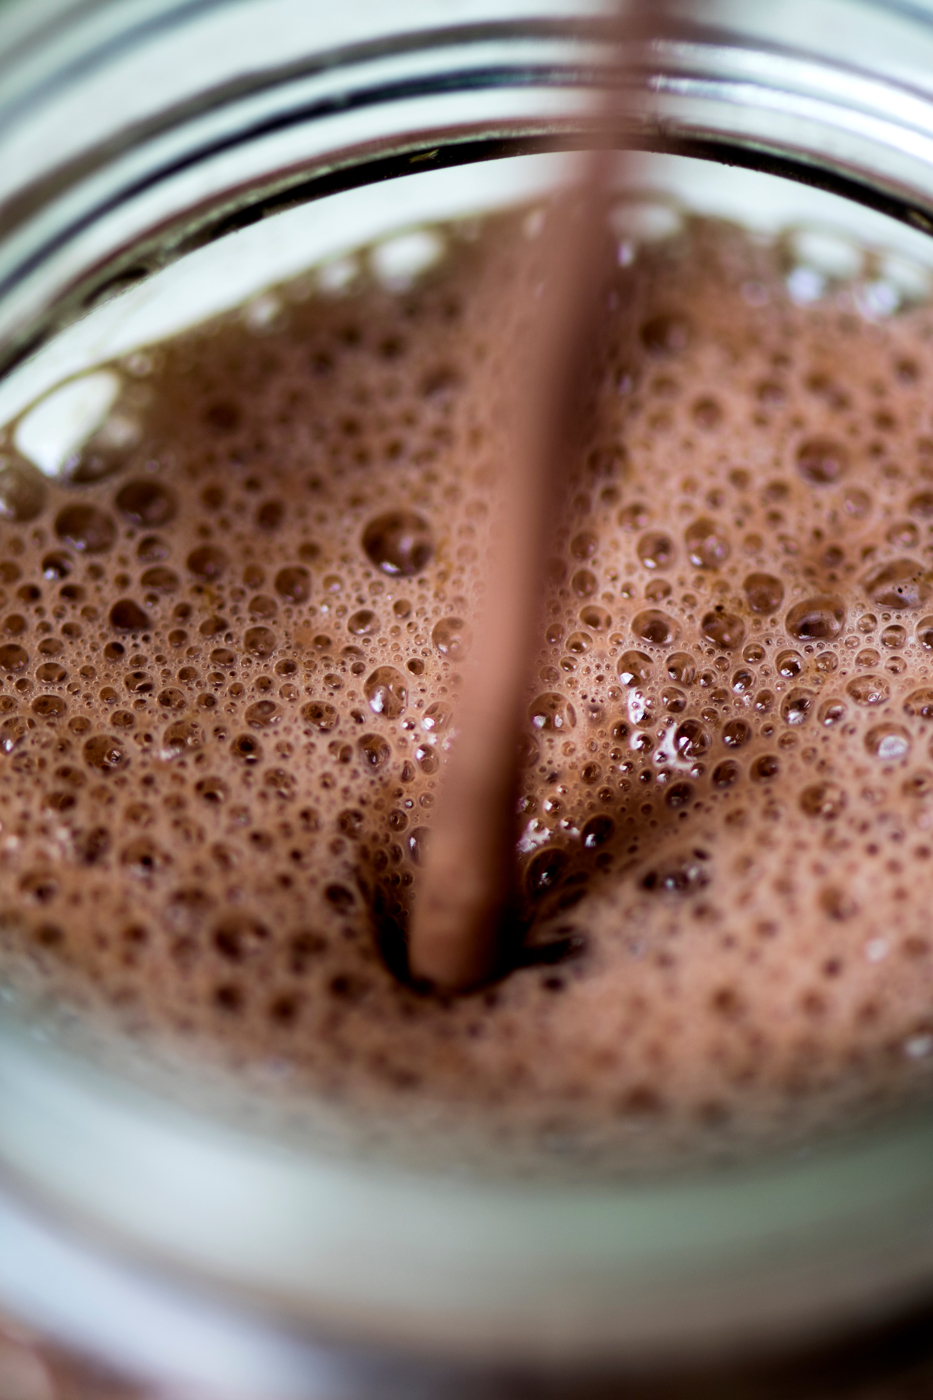 You've grown up. Now chocolate milk has, too. - D'Amore-McKim School of  Business